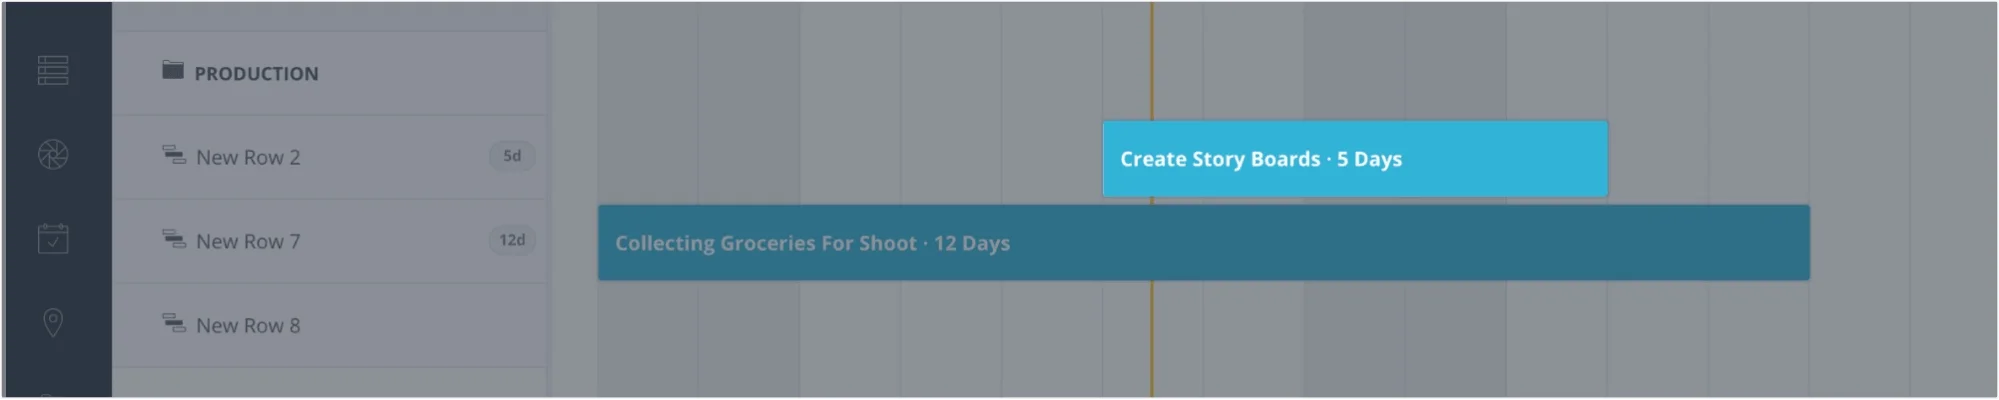 Production Management Software - Create Storyboard Event Block - StudioBinder